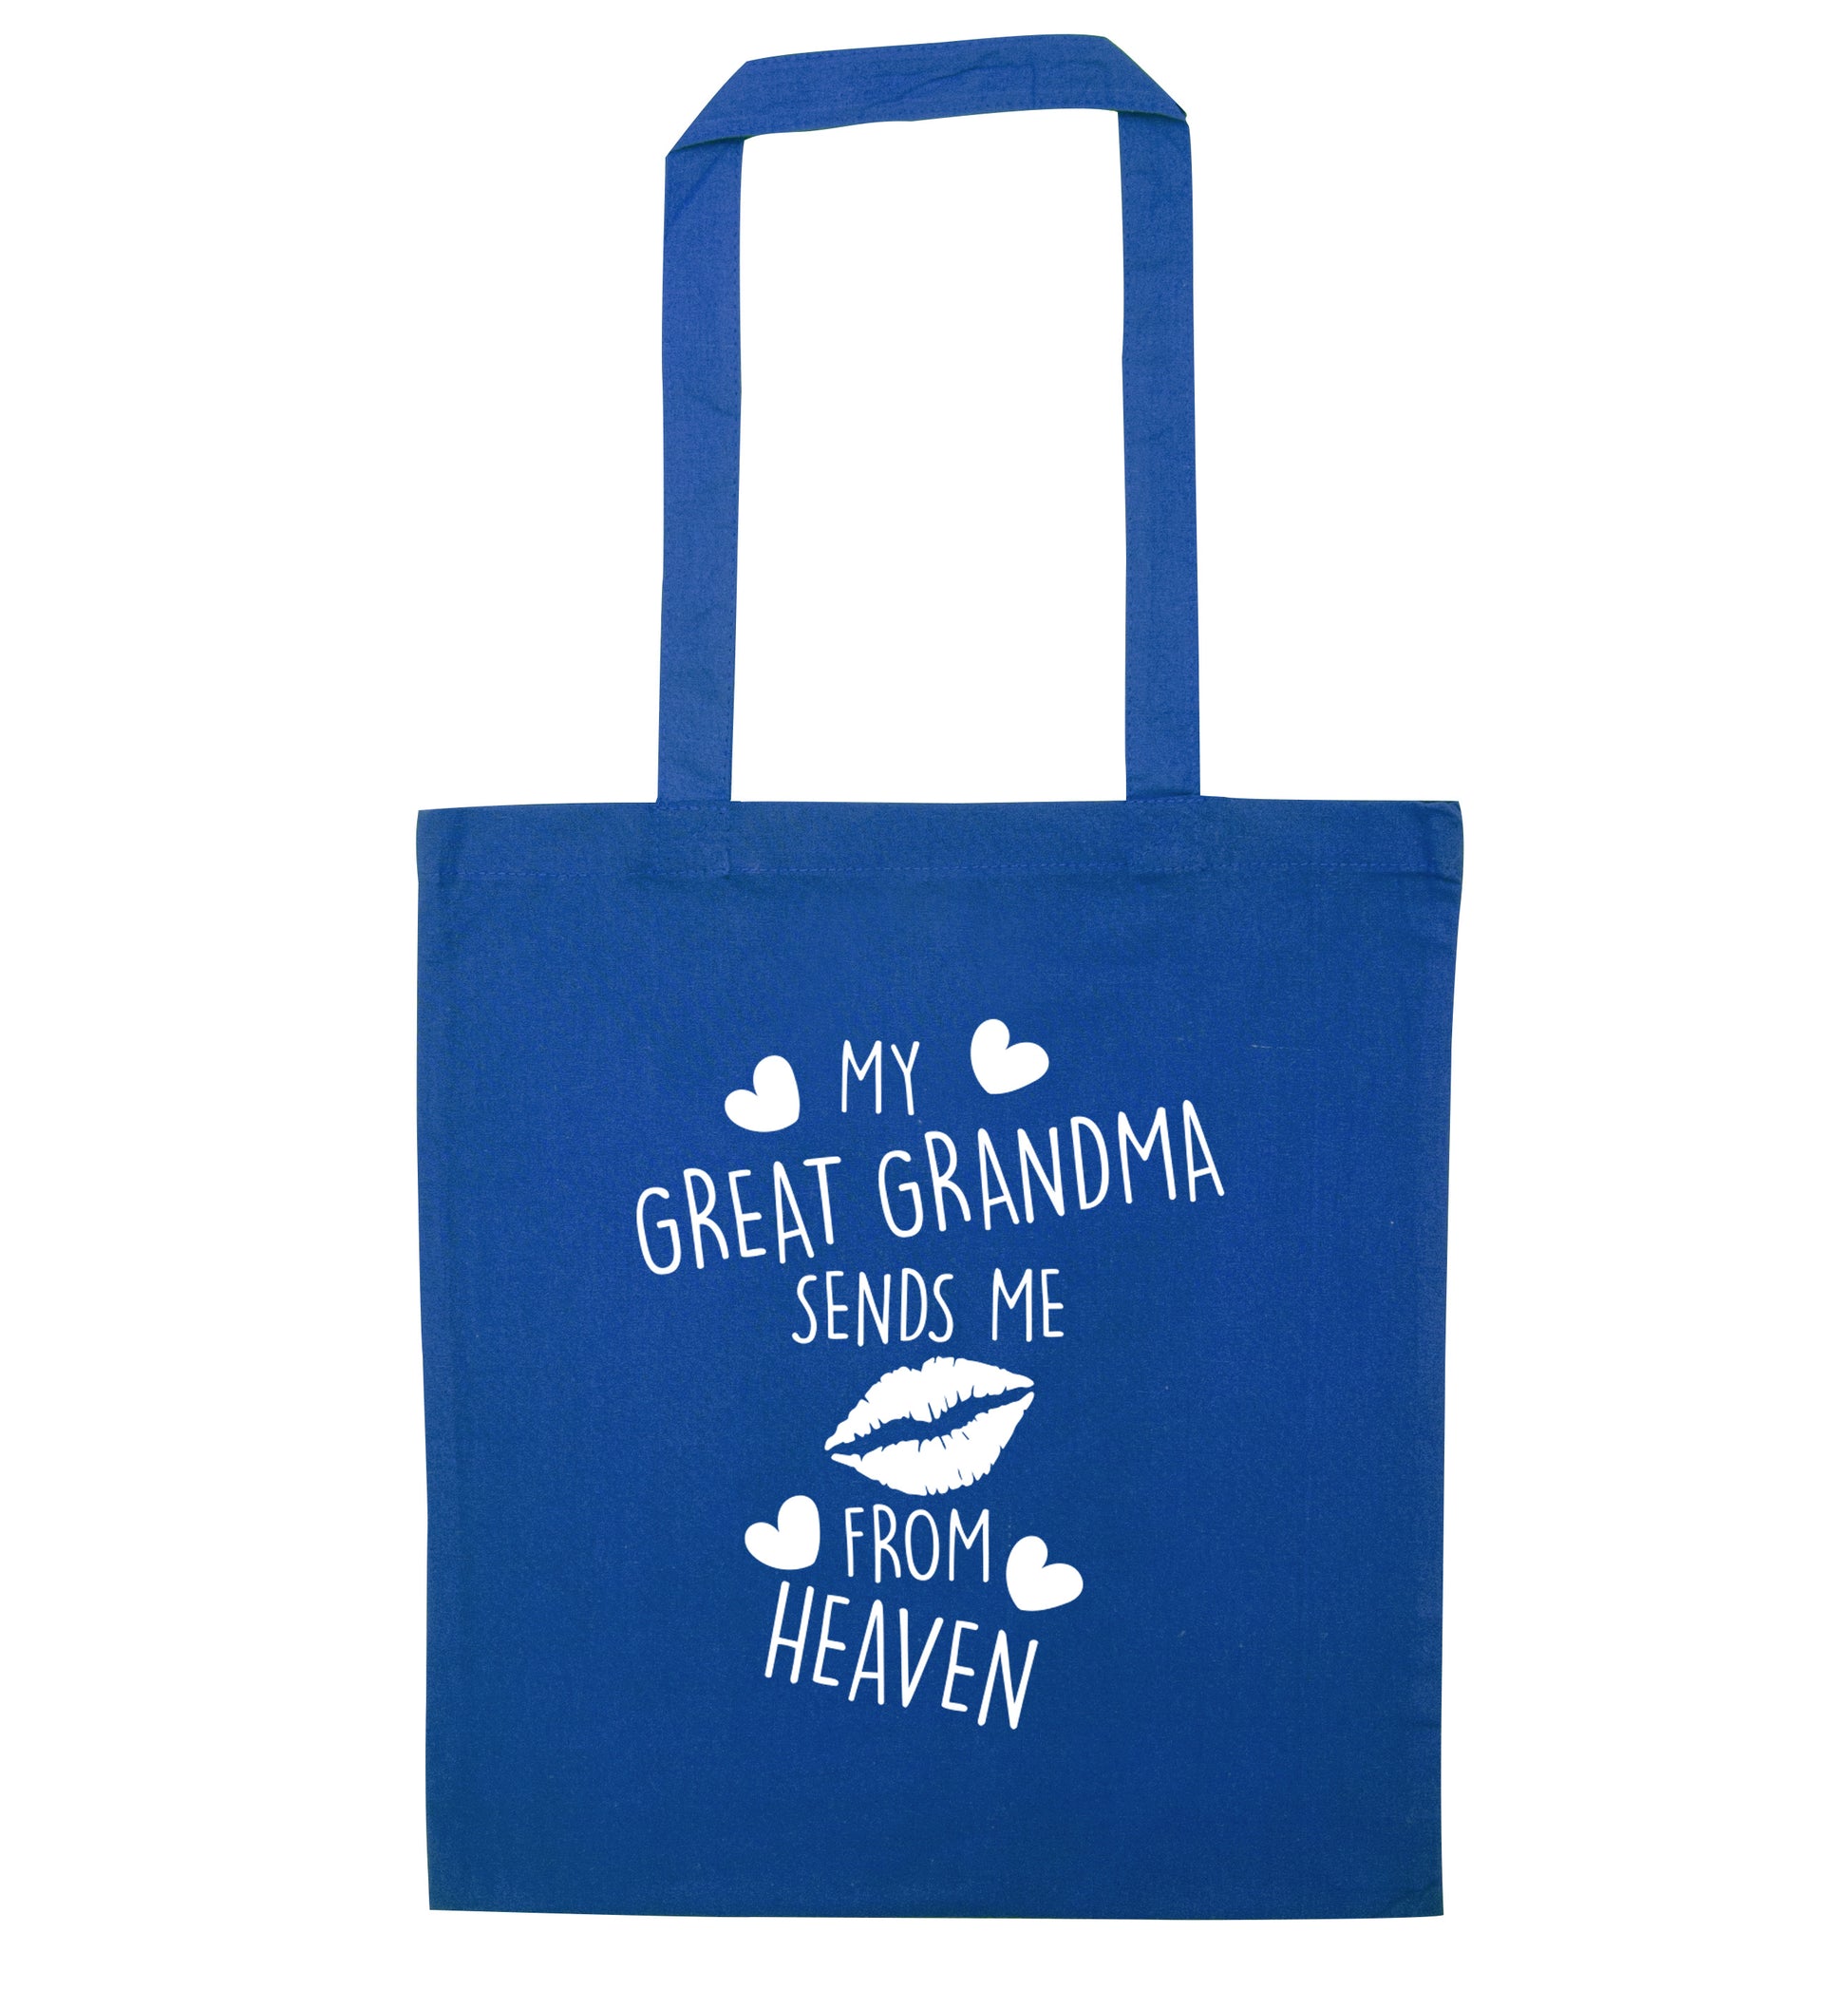 My great grandma sends me kisses from heaven blue tote bag